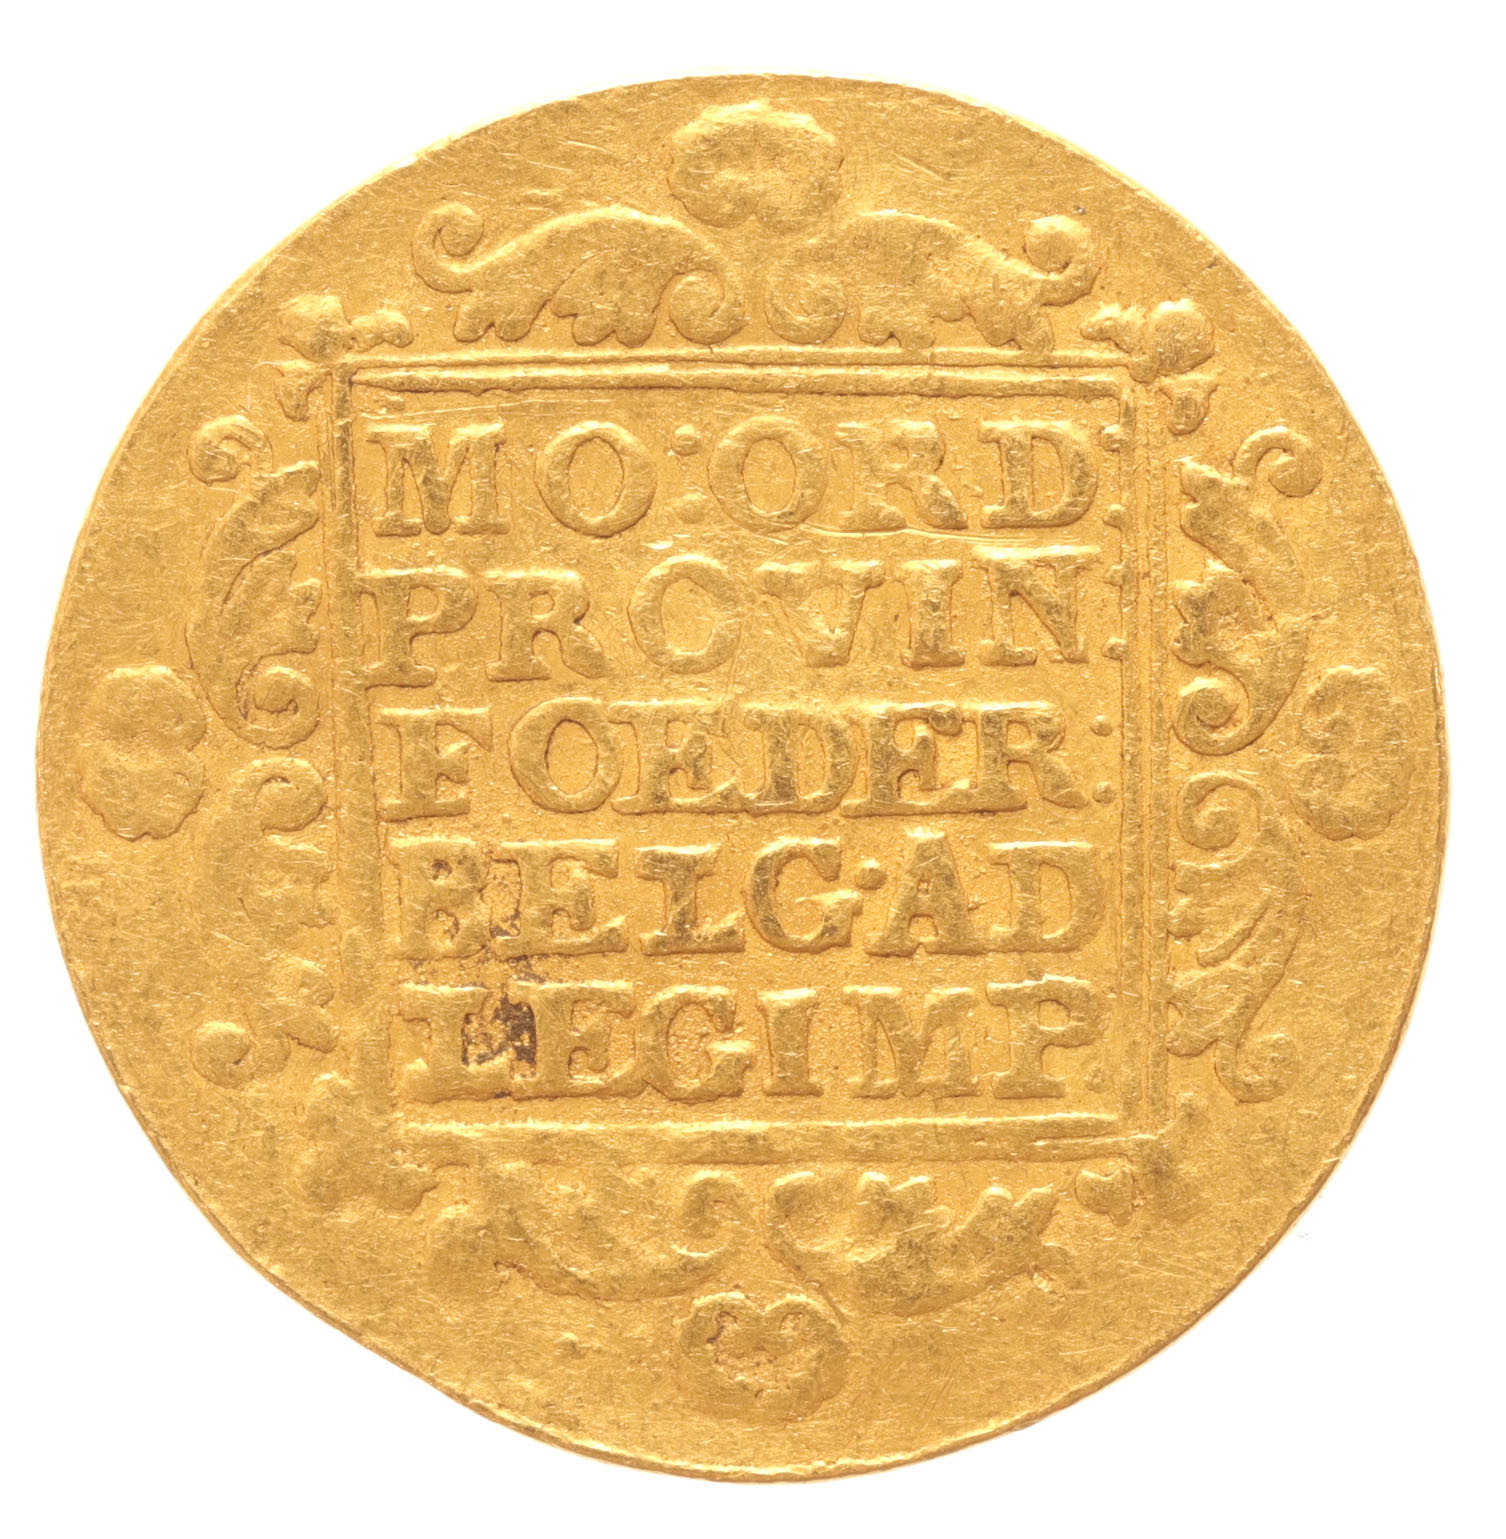 Koninkrijk Holland Gouden dukaat 1806a